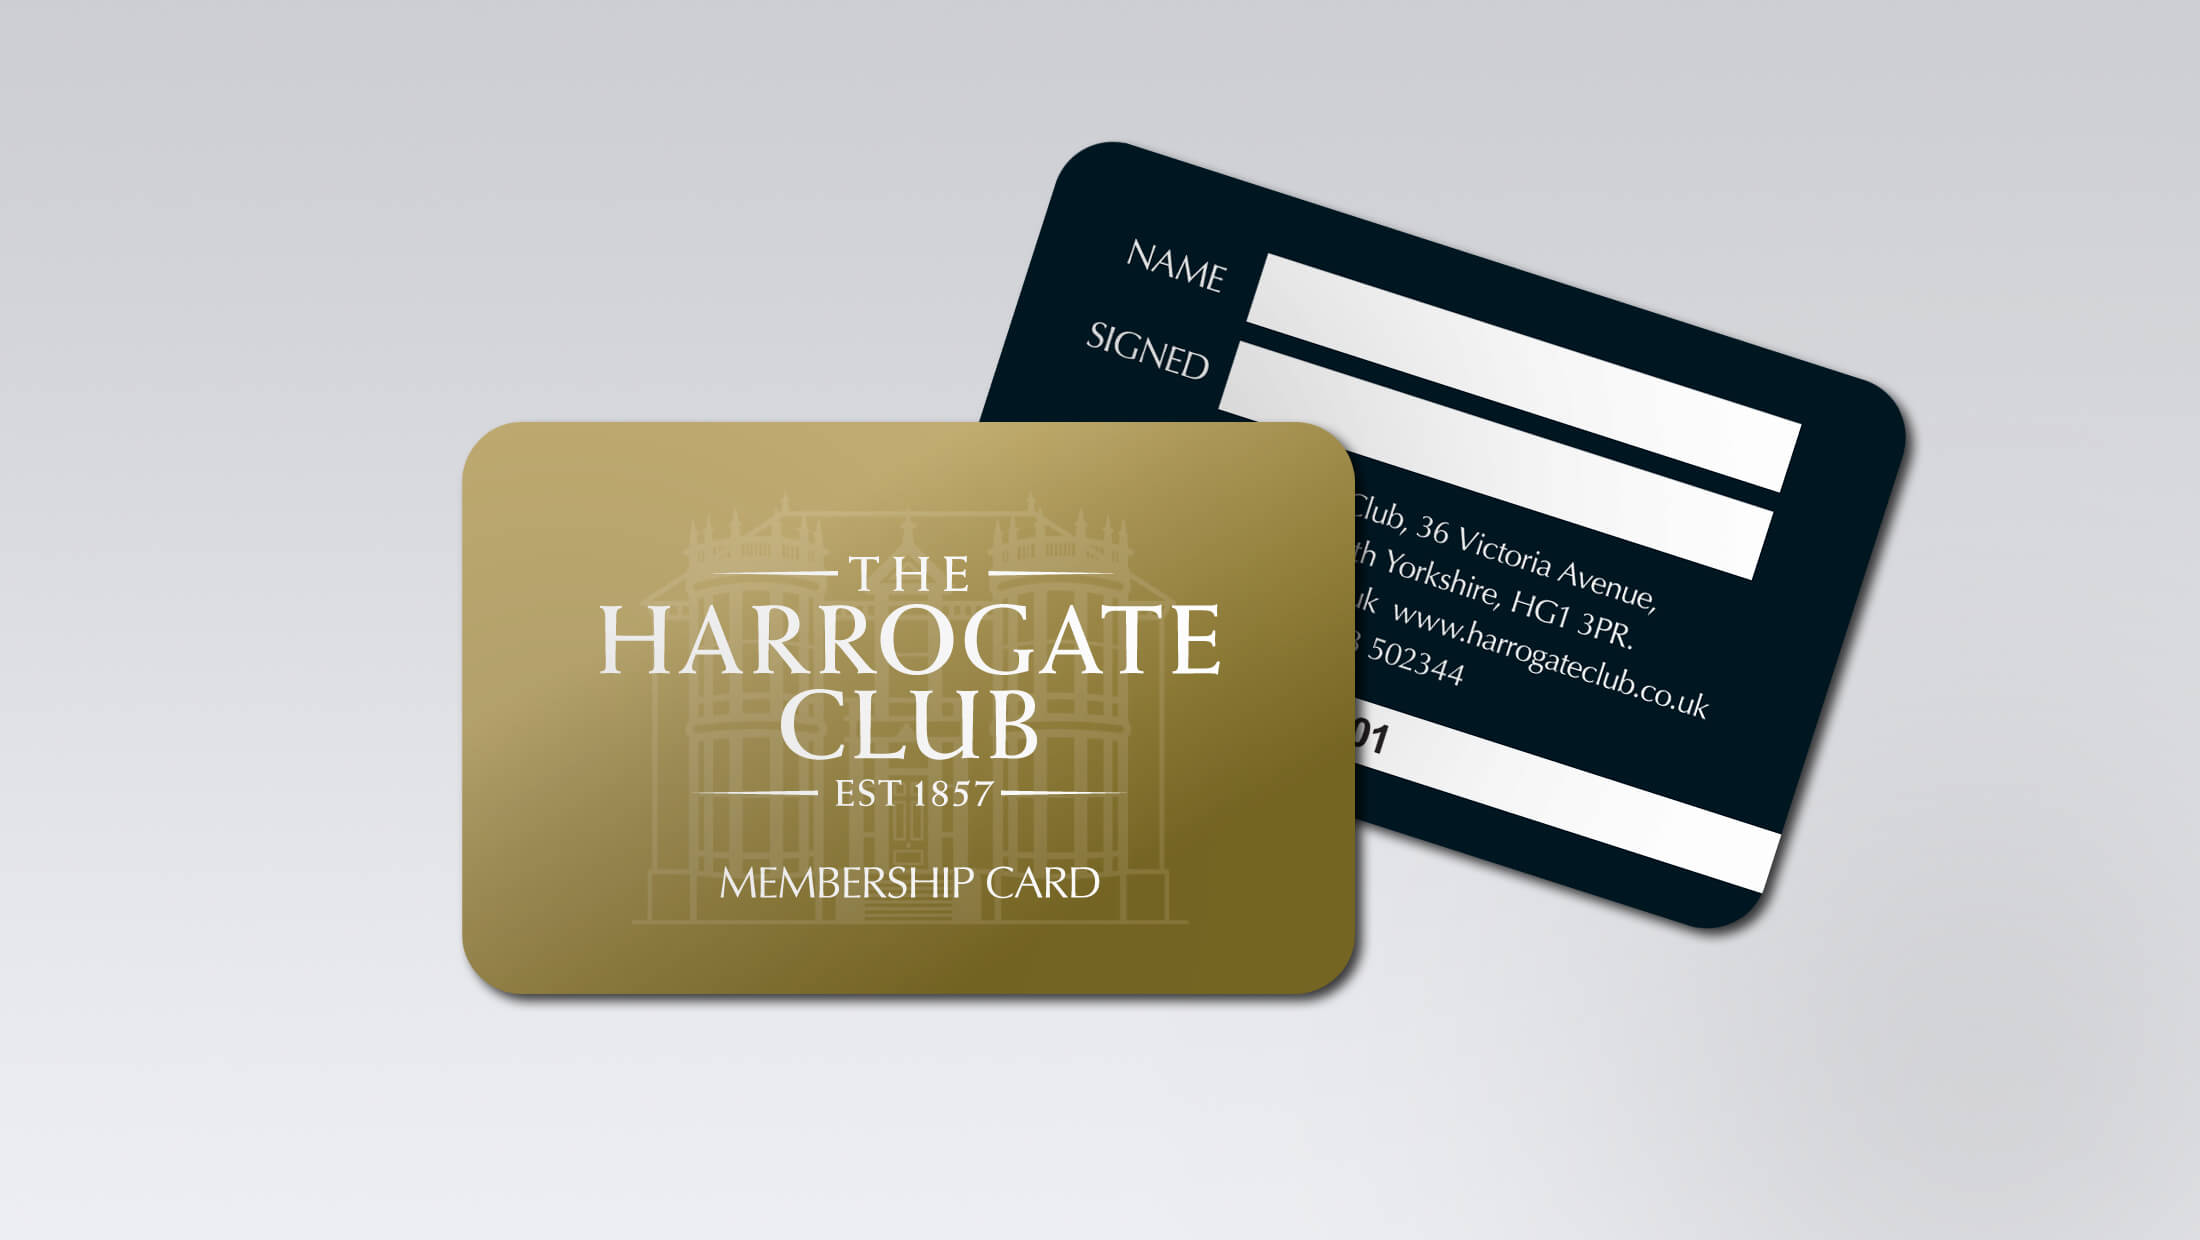 Membership Card Design For The Harrogate Club | Member Card Intended For Template For Membership Cards